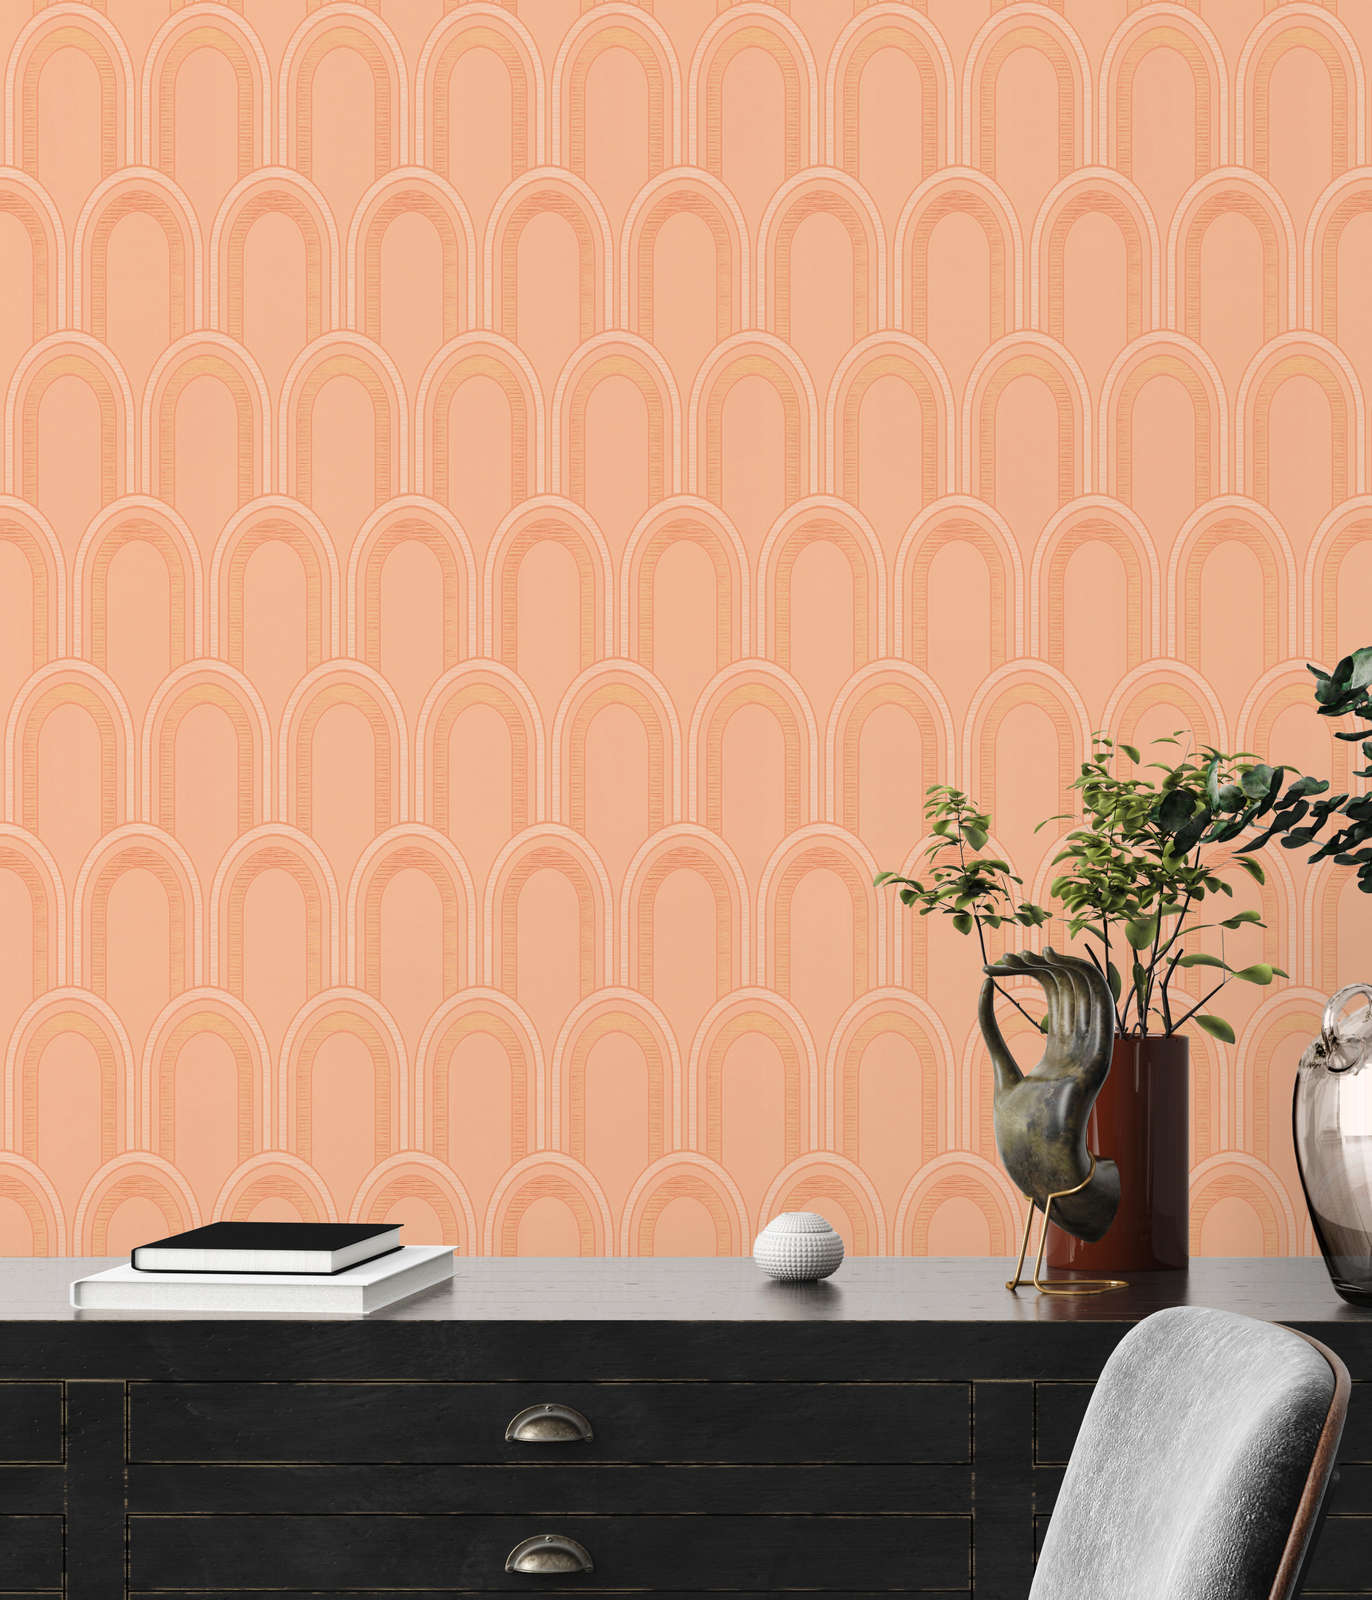             Non-woven wallpaper with bow pattern - orange, white, gold
        